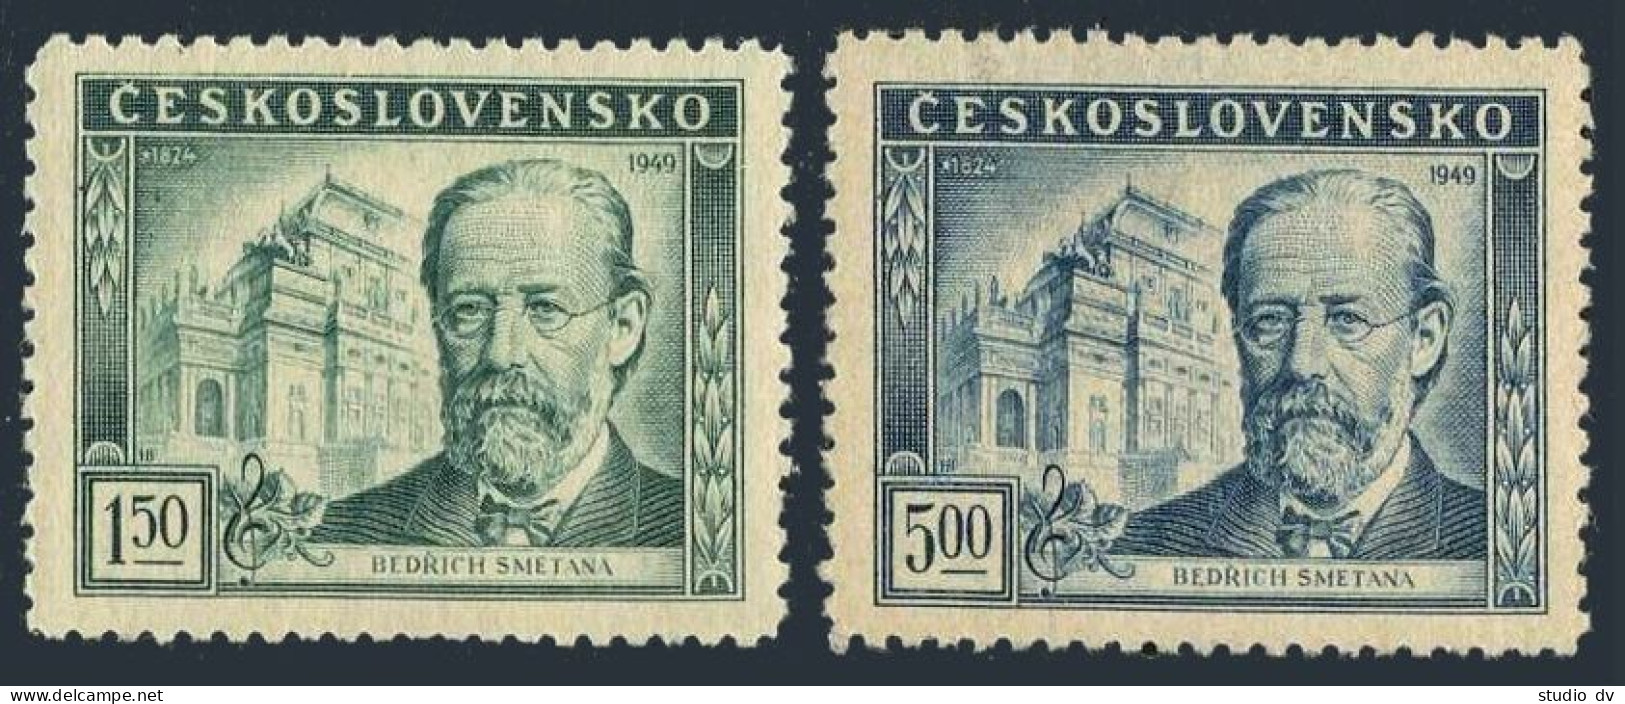 Czechoslovakia 386-387, MNH. Michel 578-579. Bedrich Smetana, Composer, 1949. - Nuovi